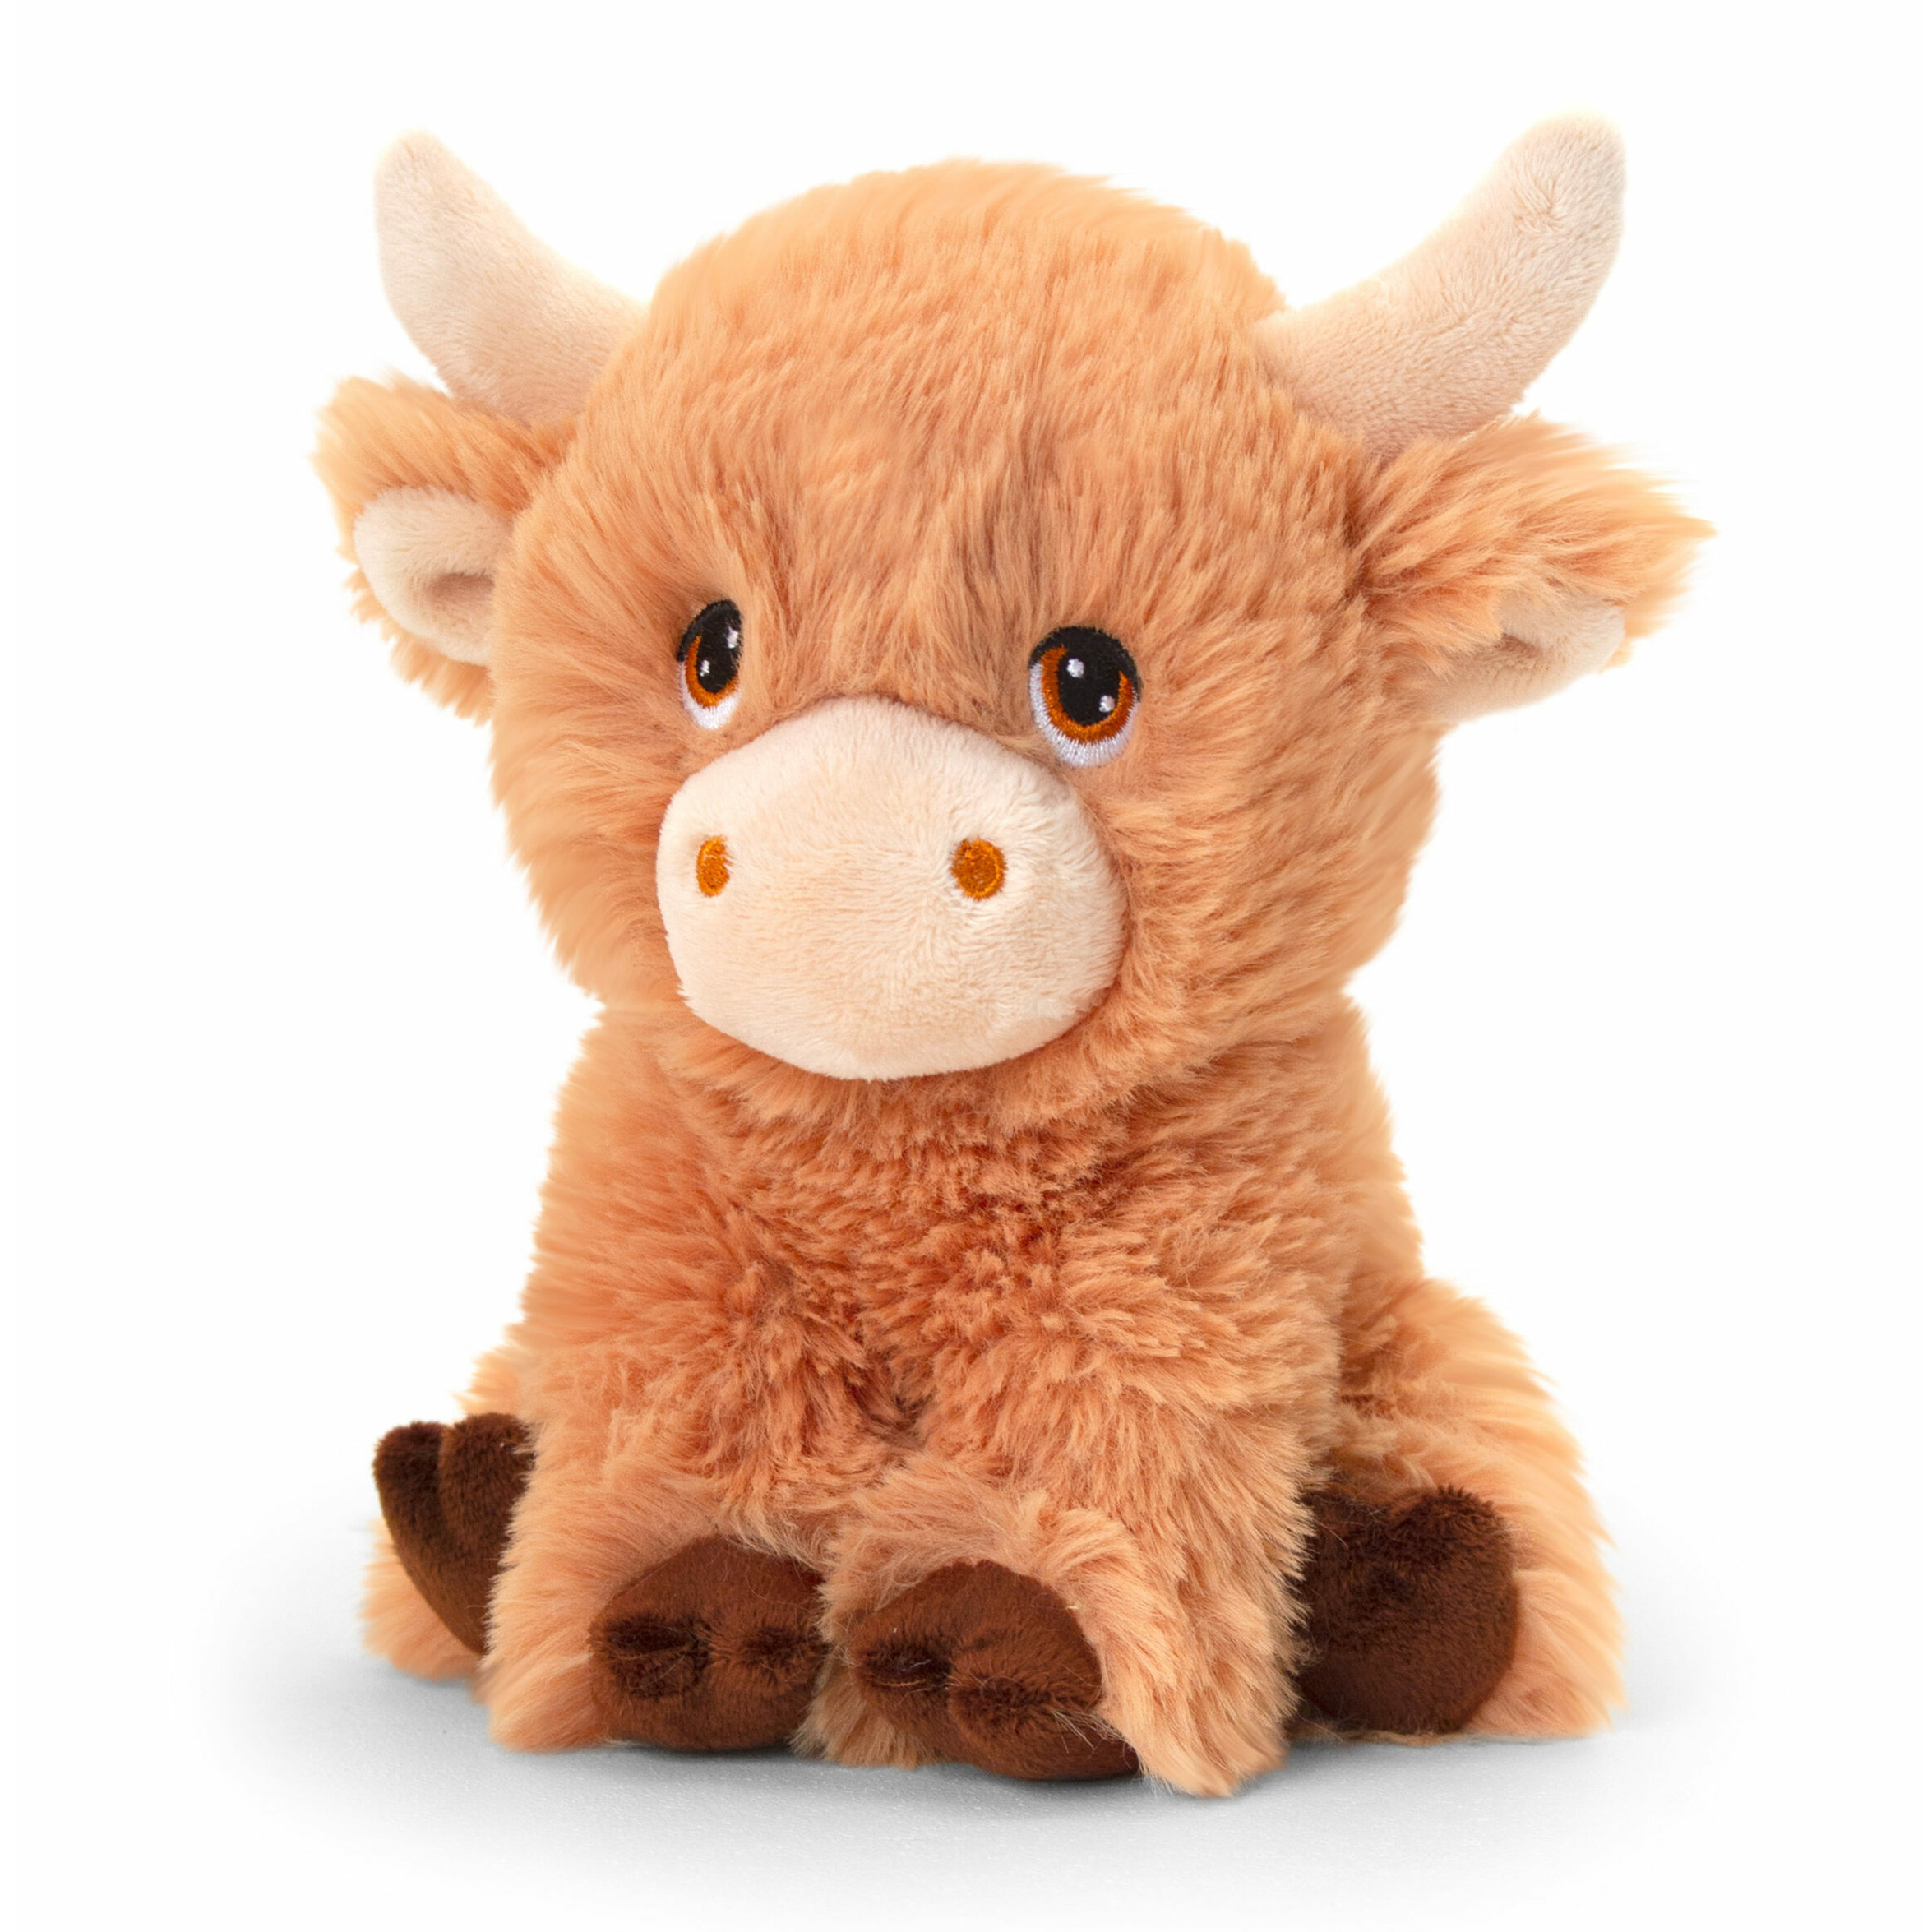 Keel Toys pluche koe met hoorns knuffeldier bruin zittend 25 cm